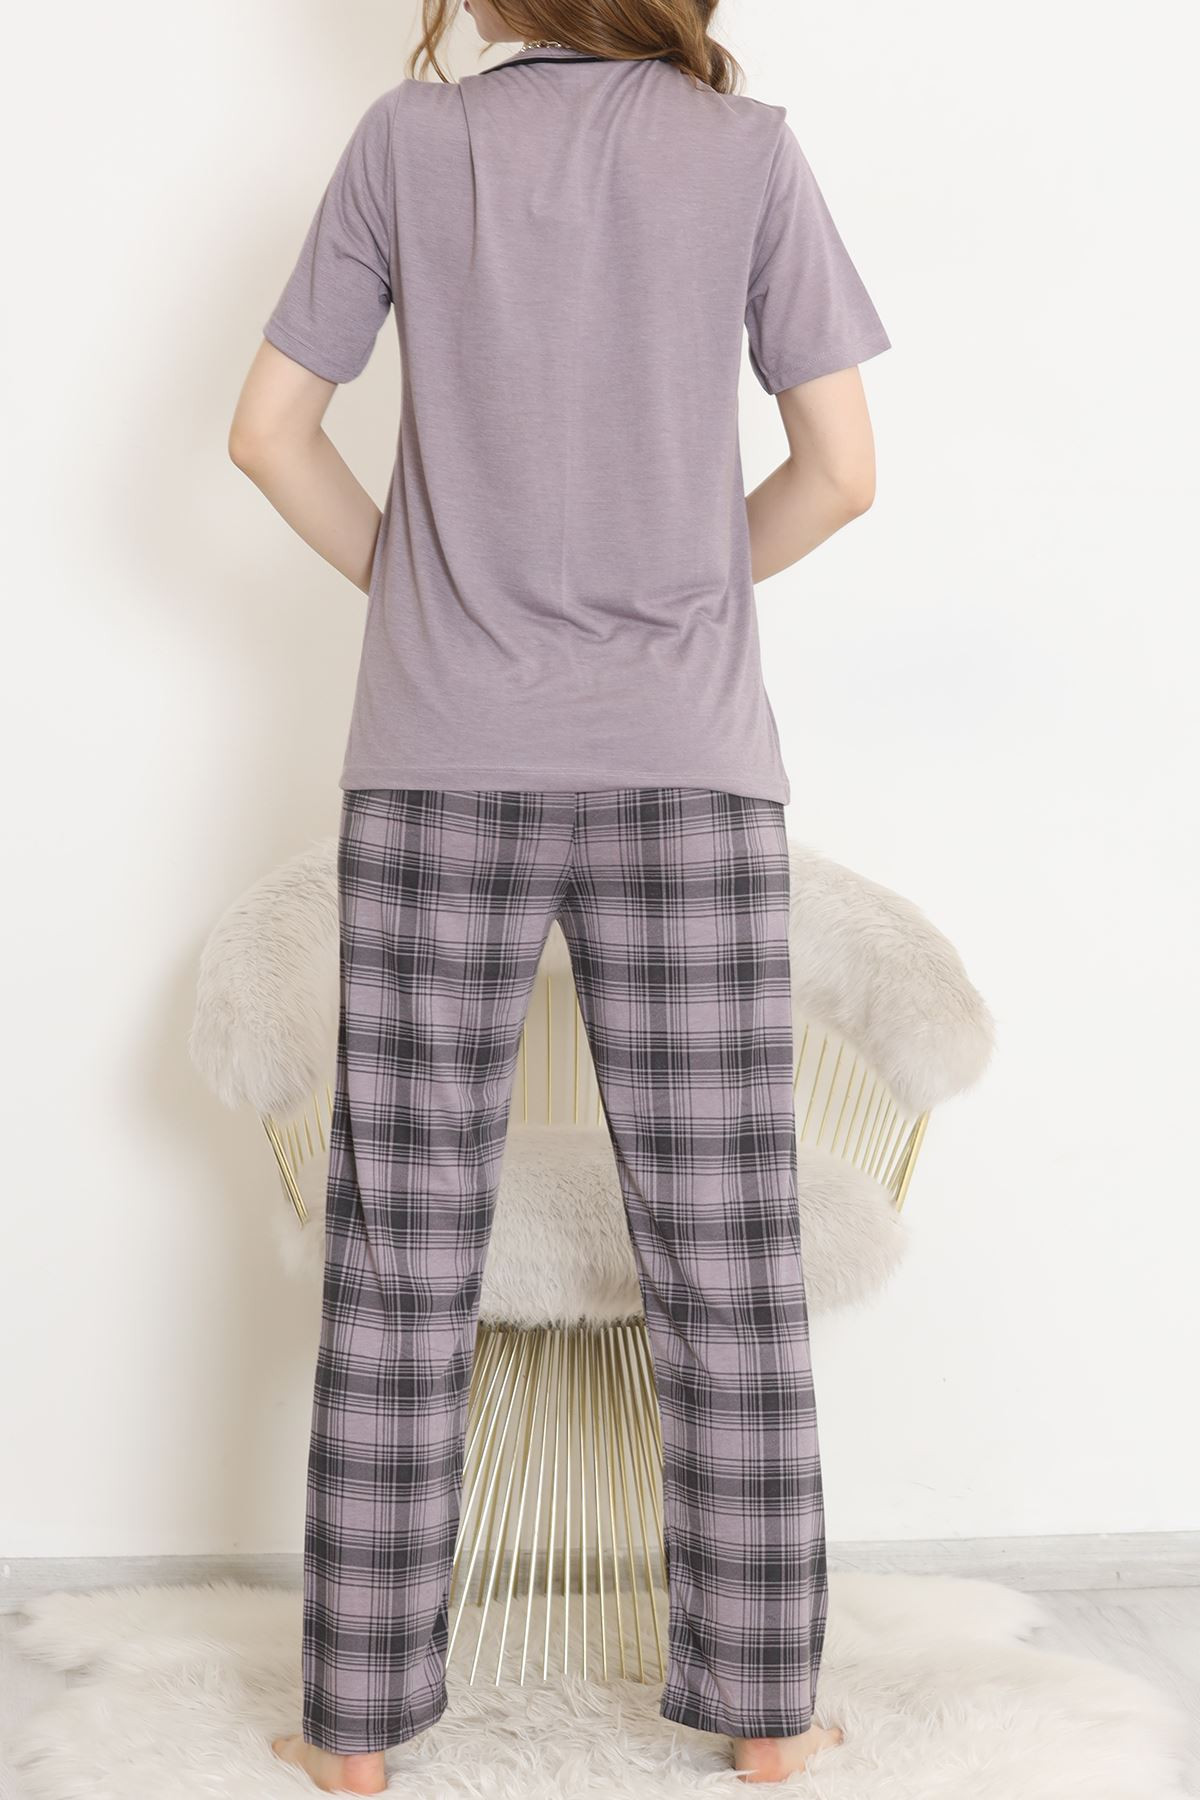 Kısa Kol Pijama Takımı Lila1 - 11229.1287.